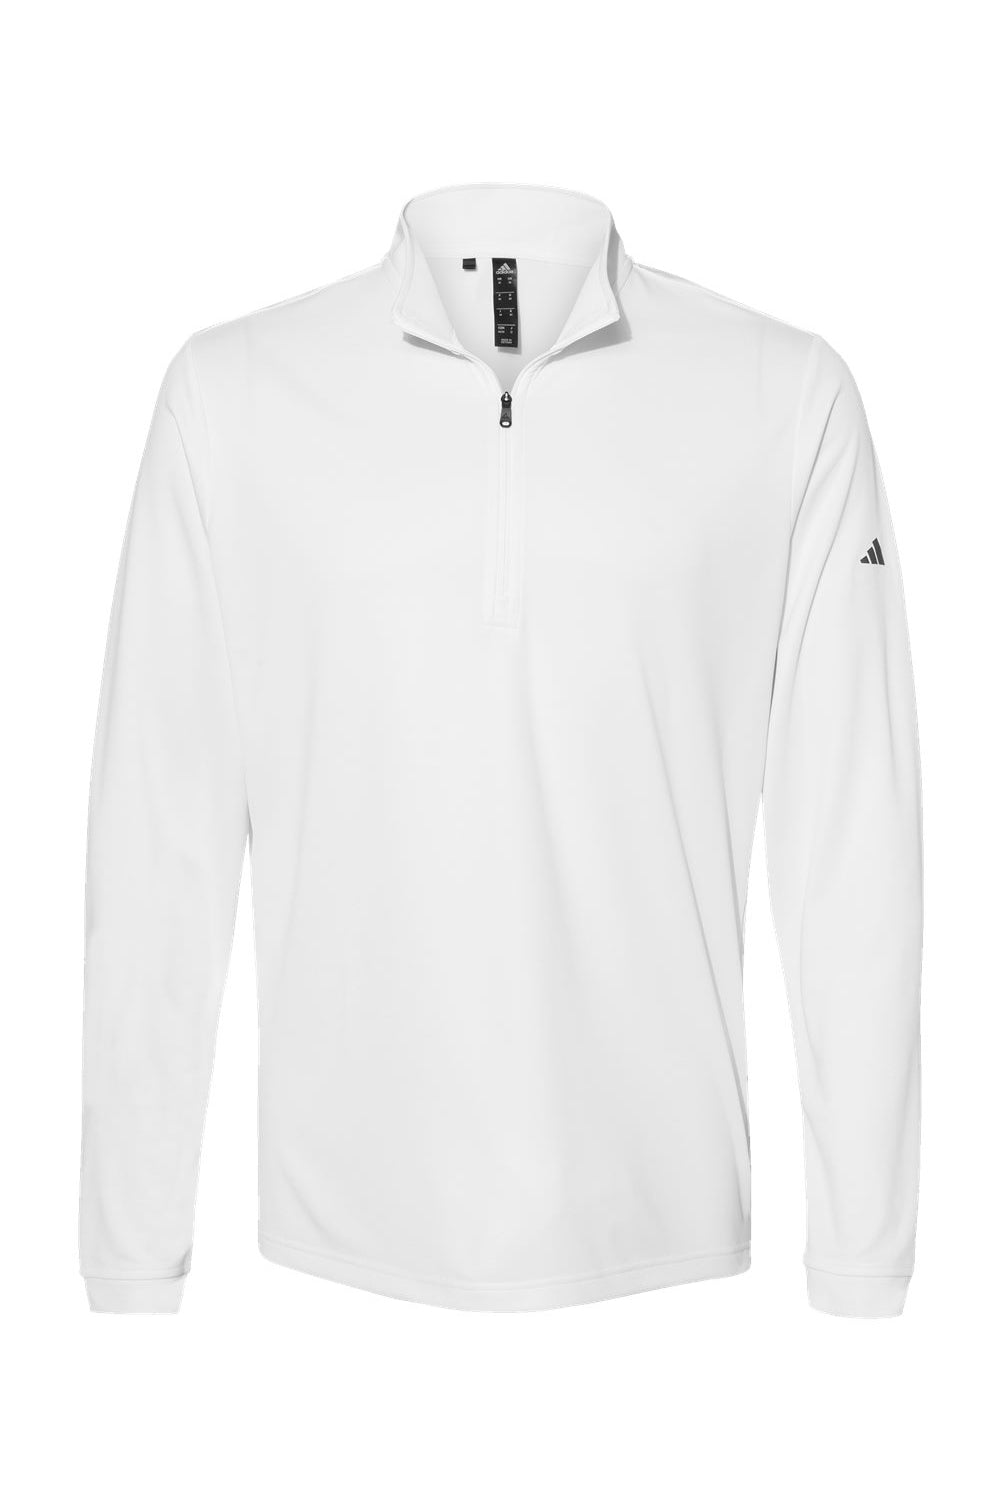 Adidas A401 Mens UPF 50+ 1/4 Zip Sweatshirt White Flat Front